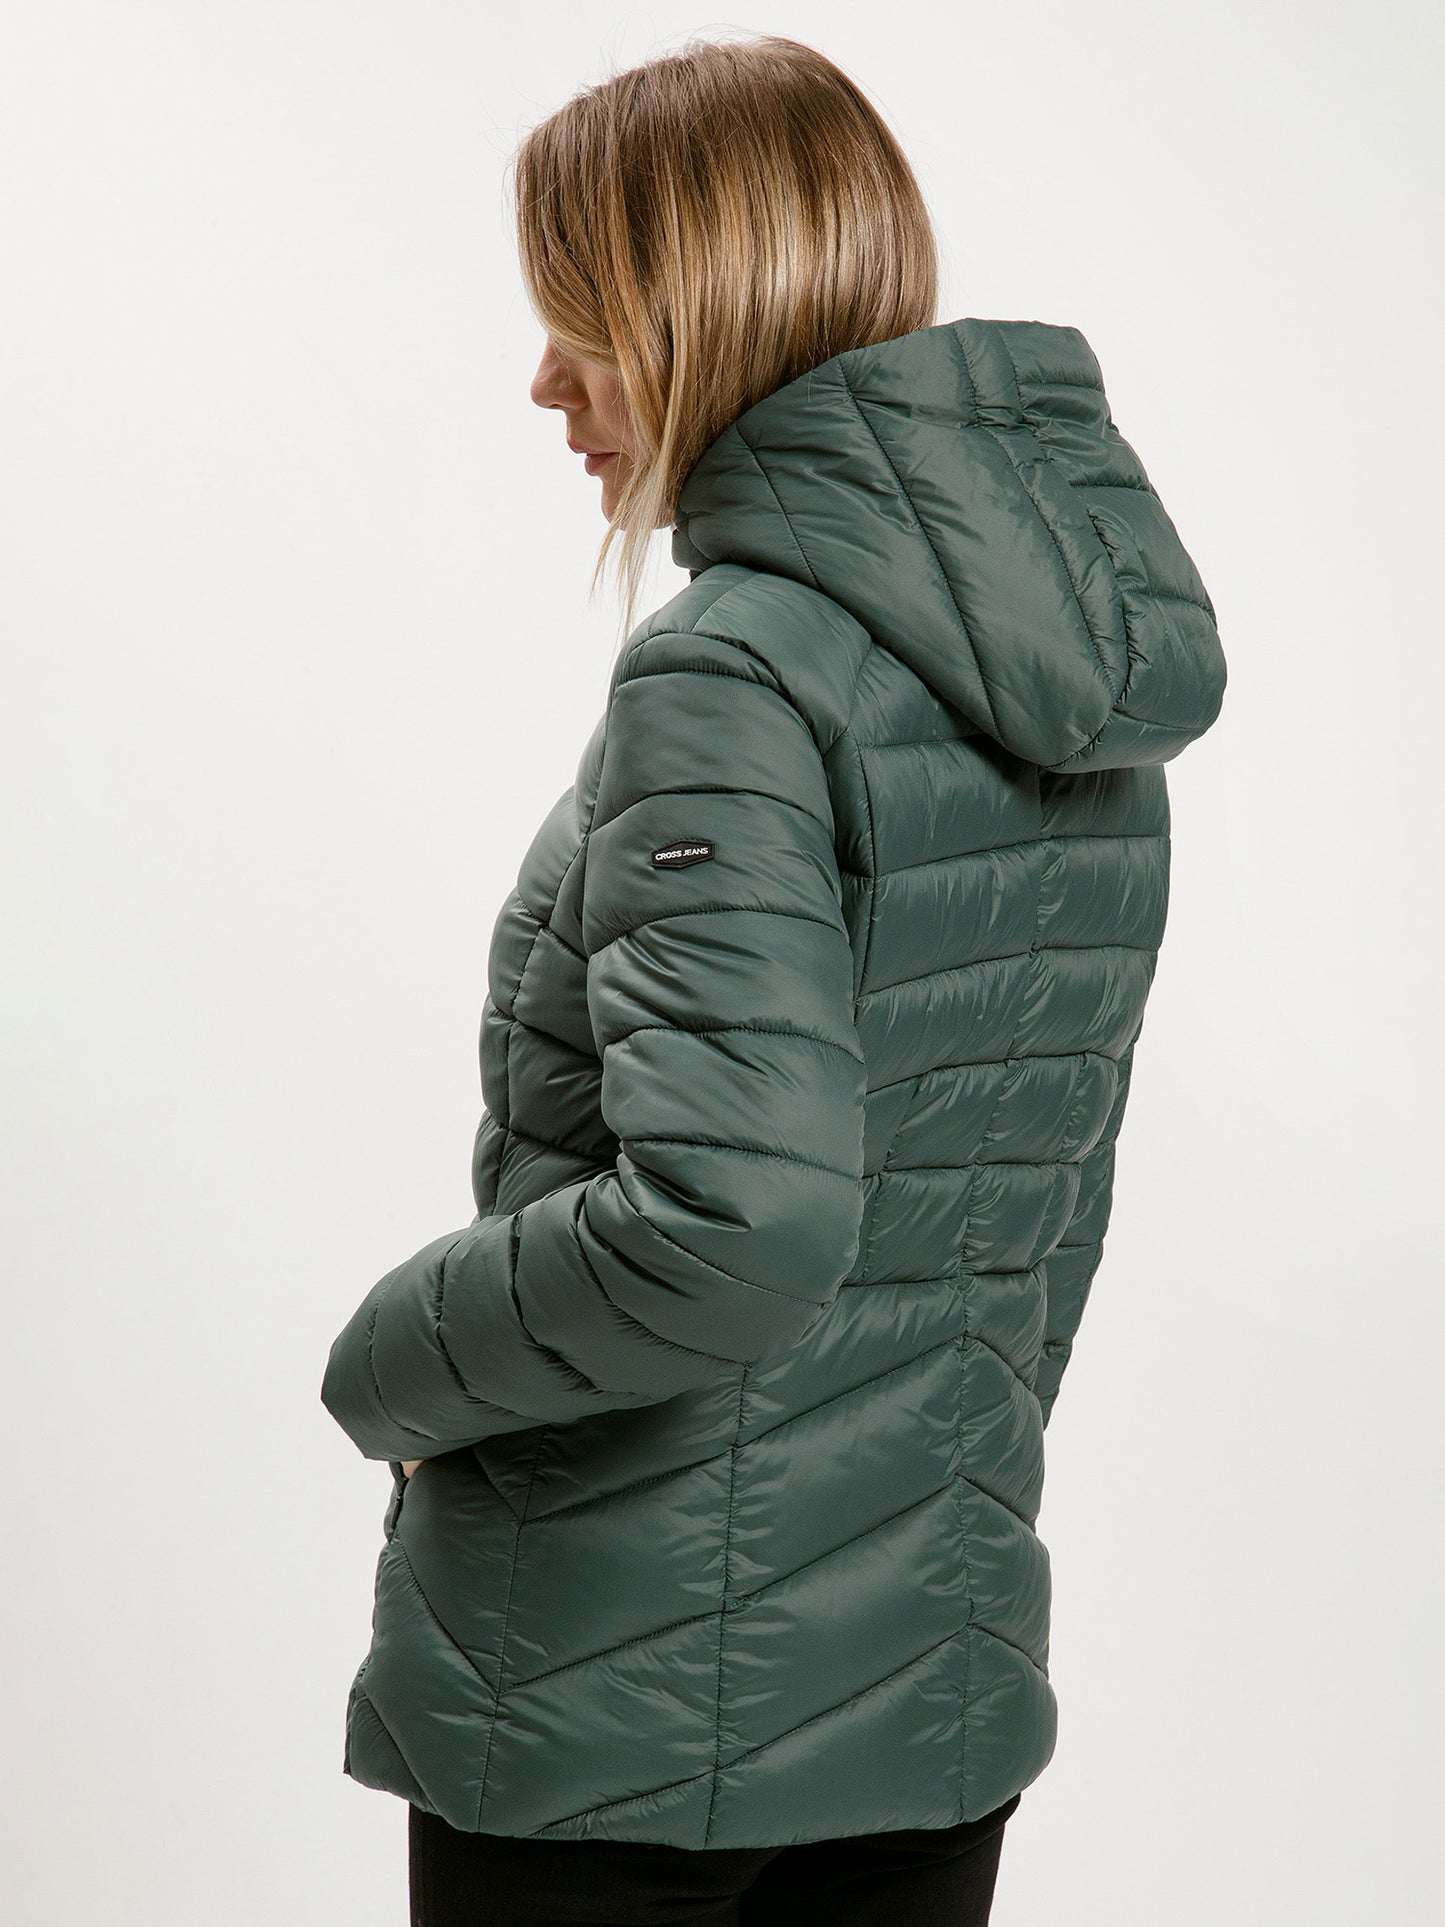 Women's regular winter jacket in green